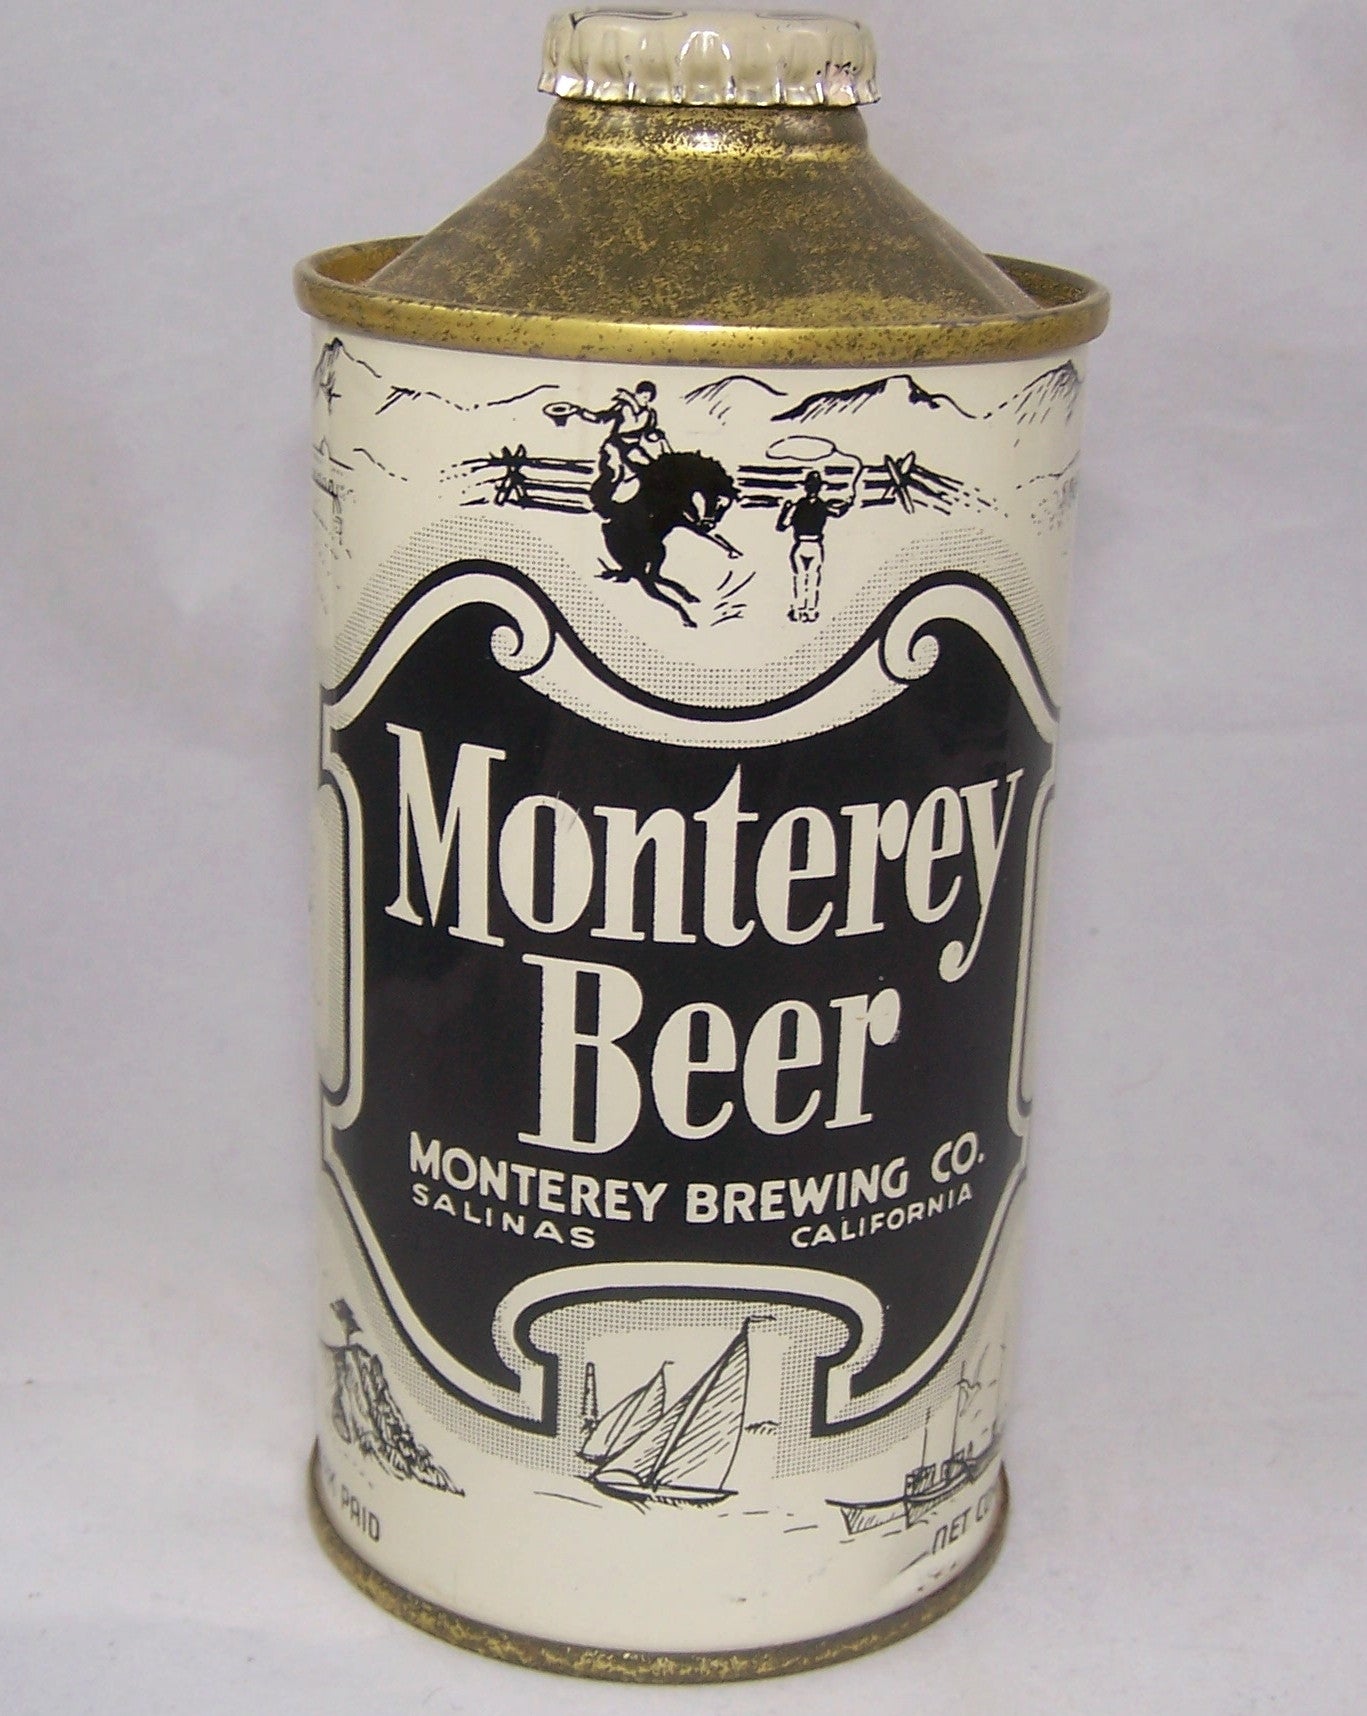 Monterey Beer (Black) USBC 174-10, Grade A1+ Sold on 03/02/17